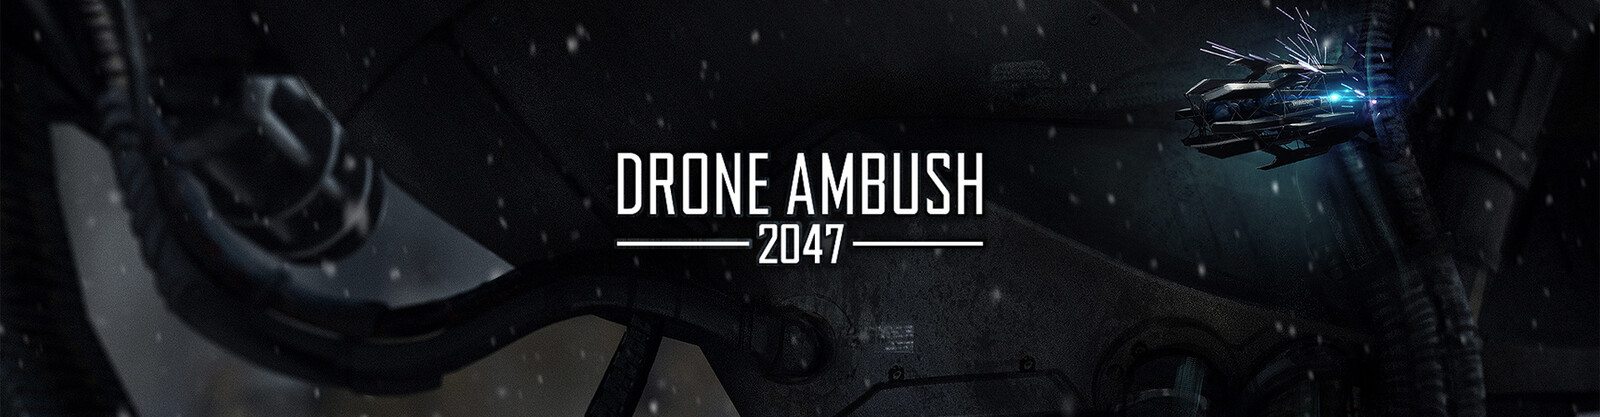 Drone Ambush 2047